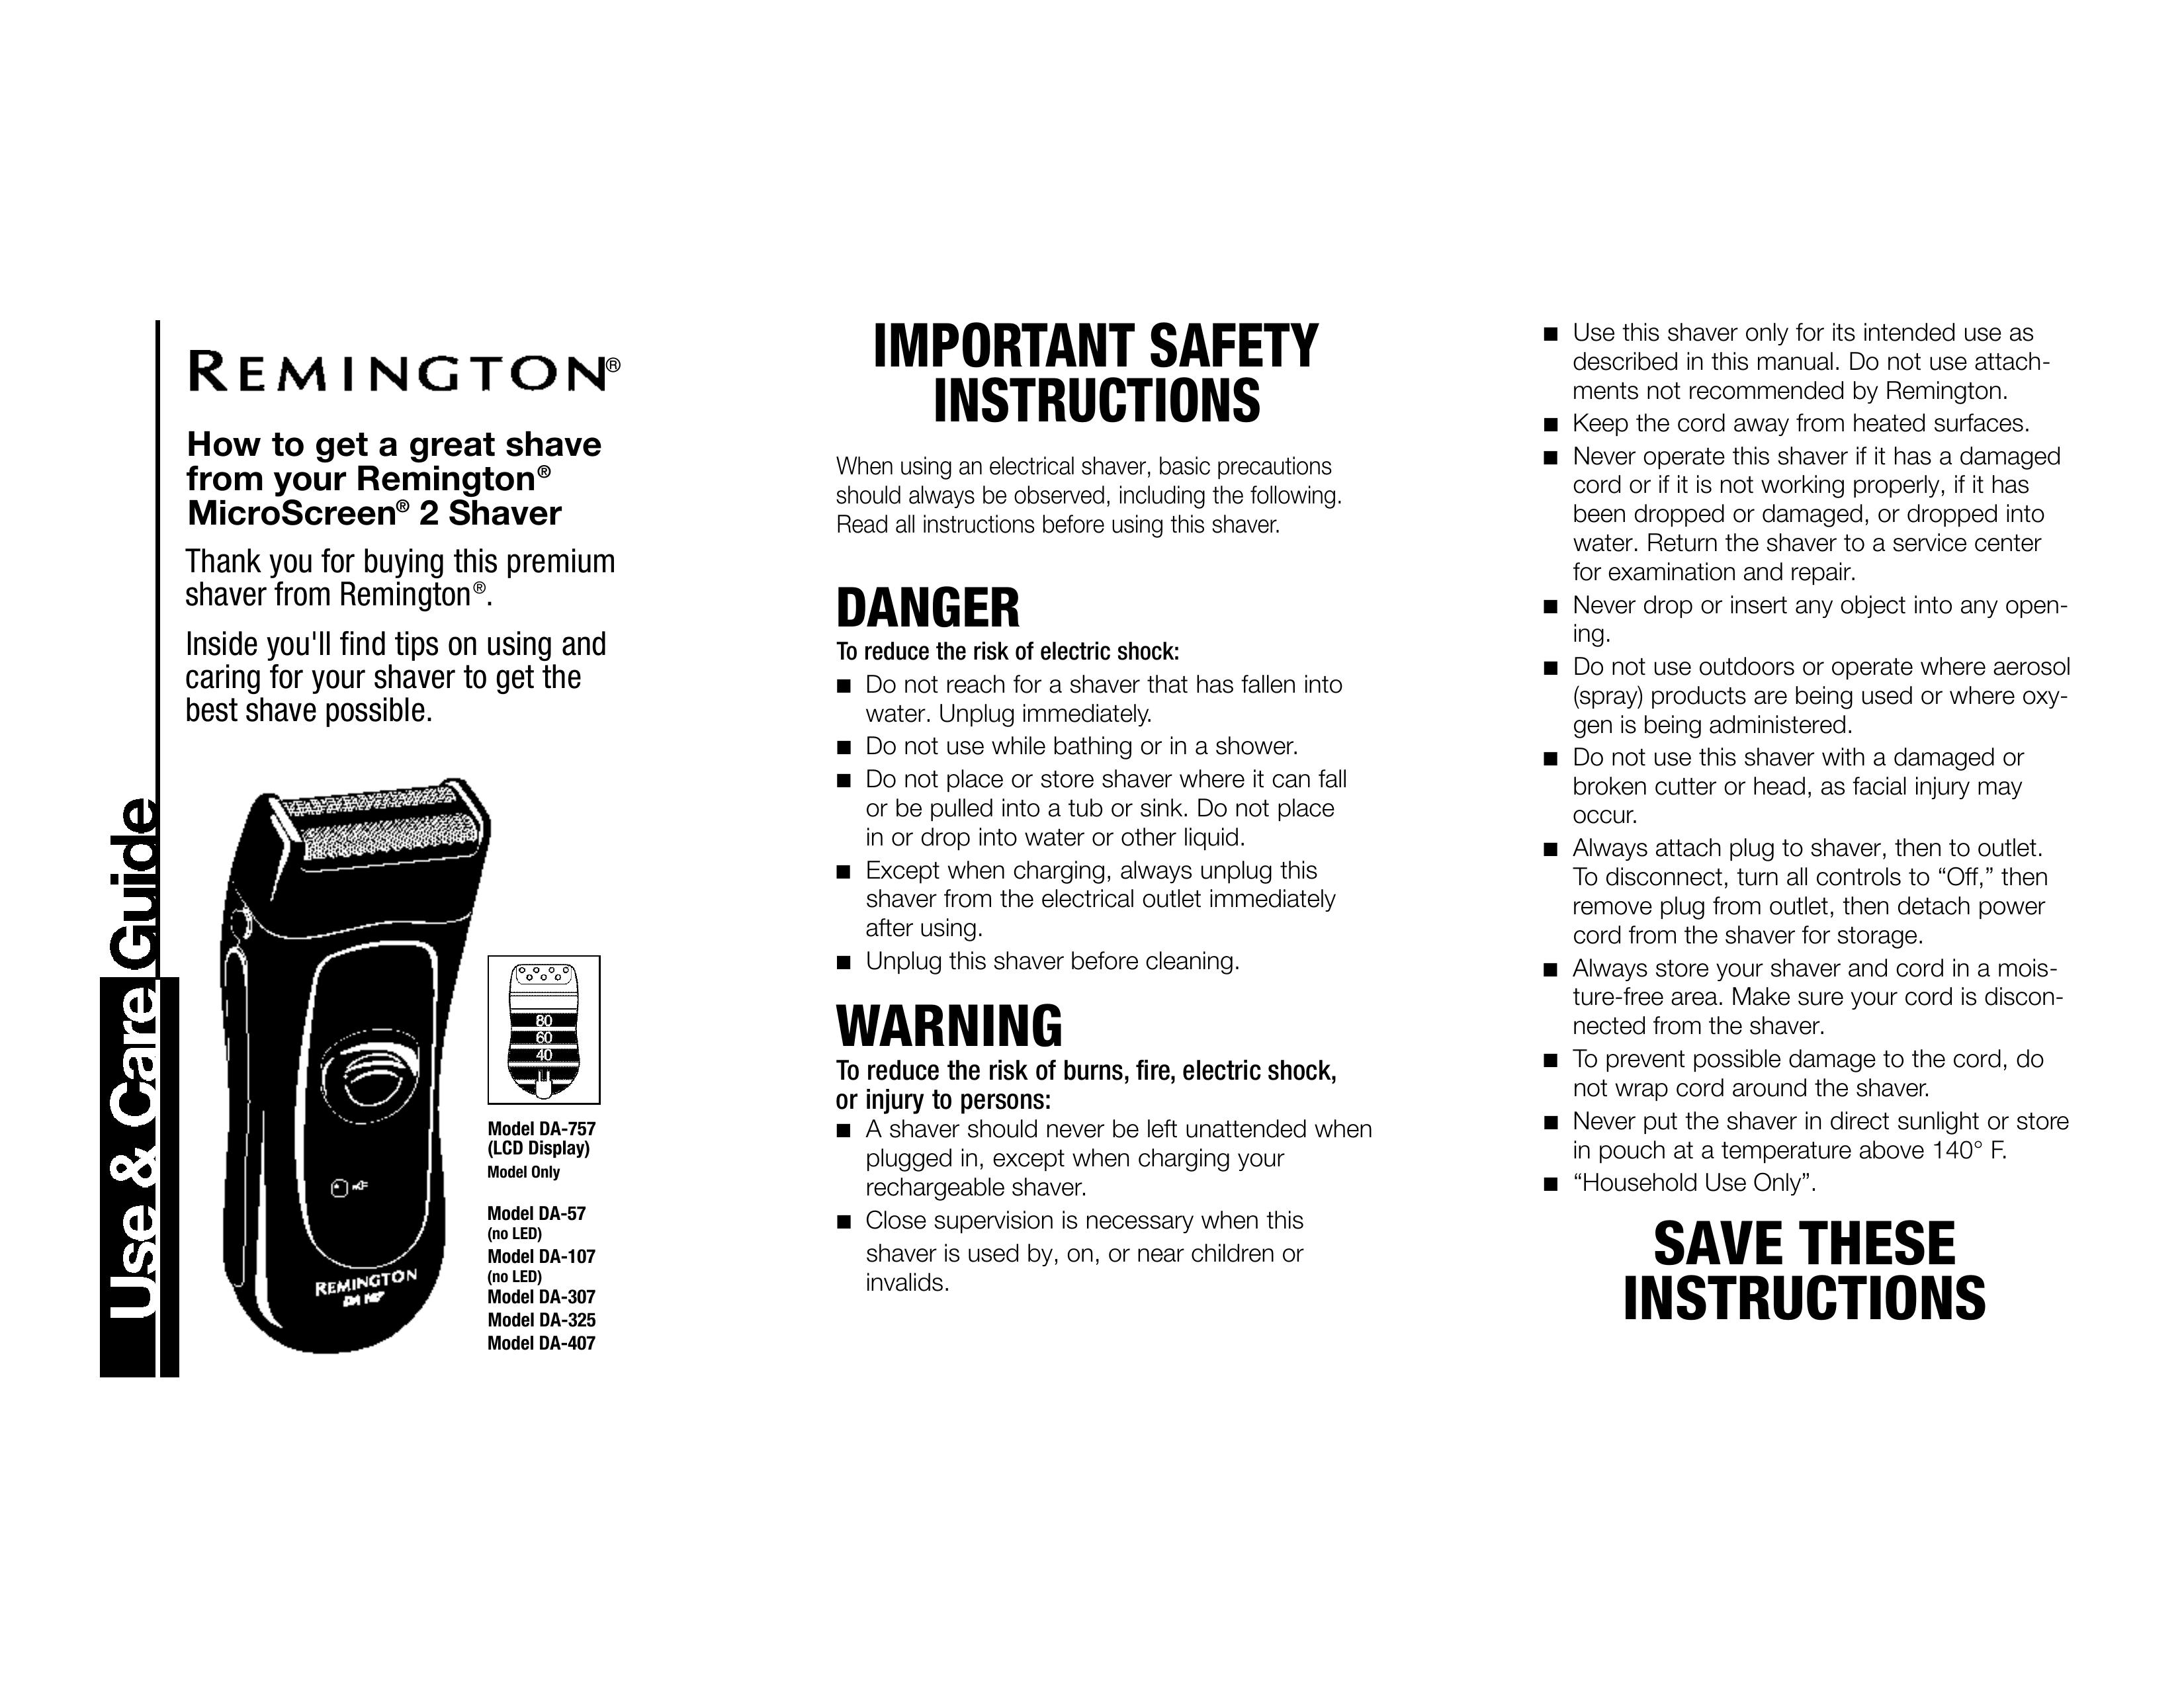 Remington DA-307 Electric Shaver User Manual